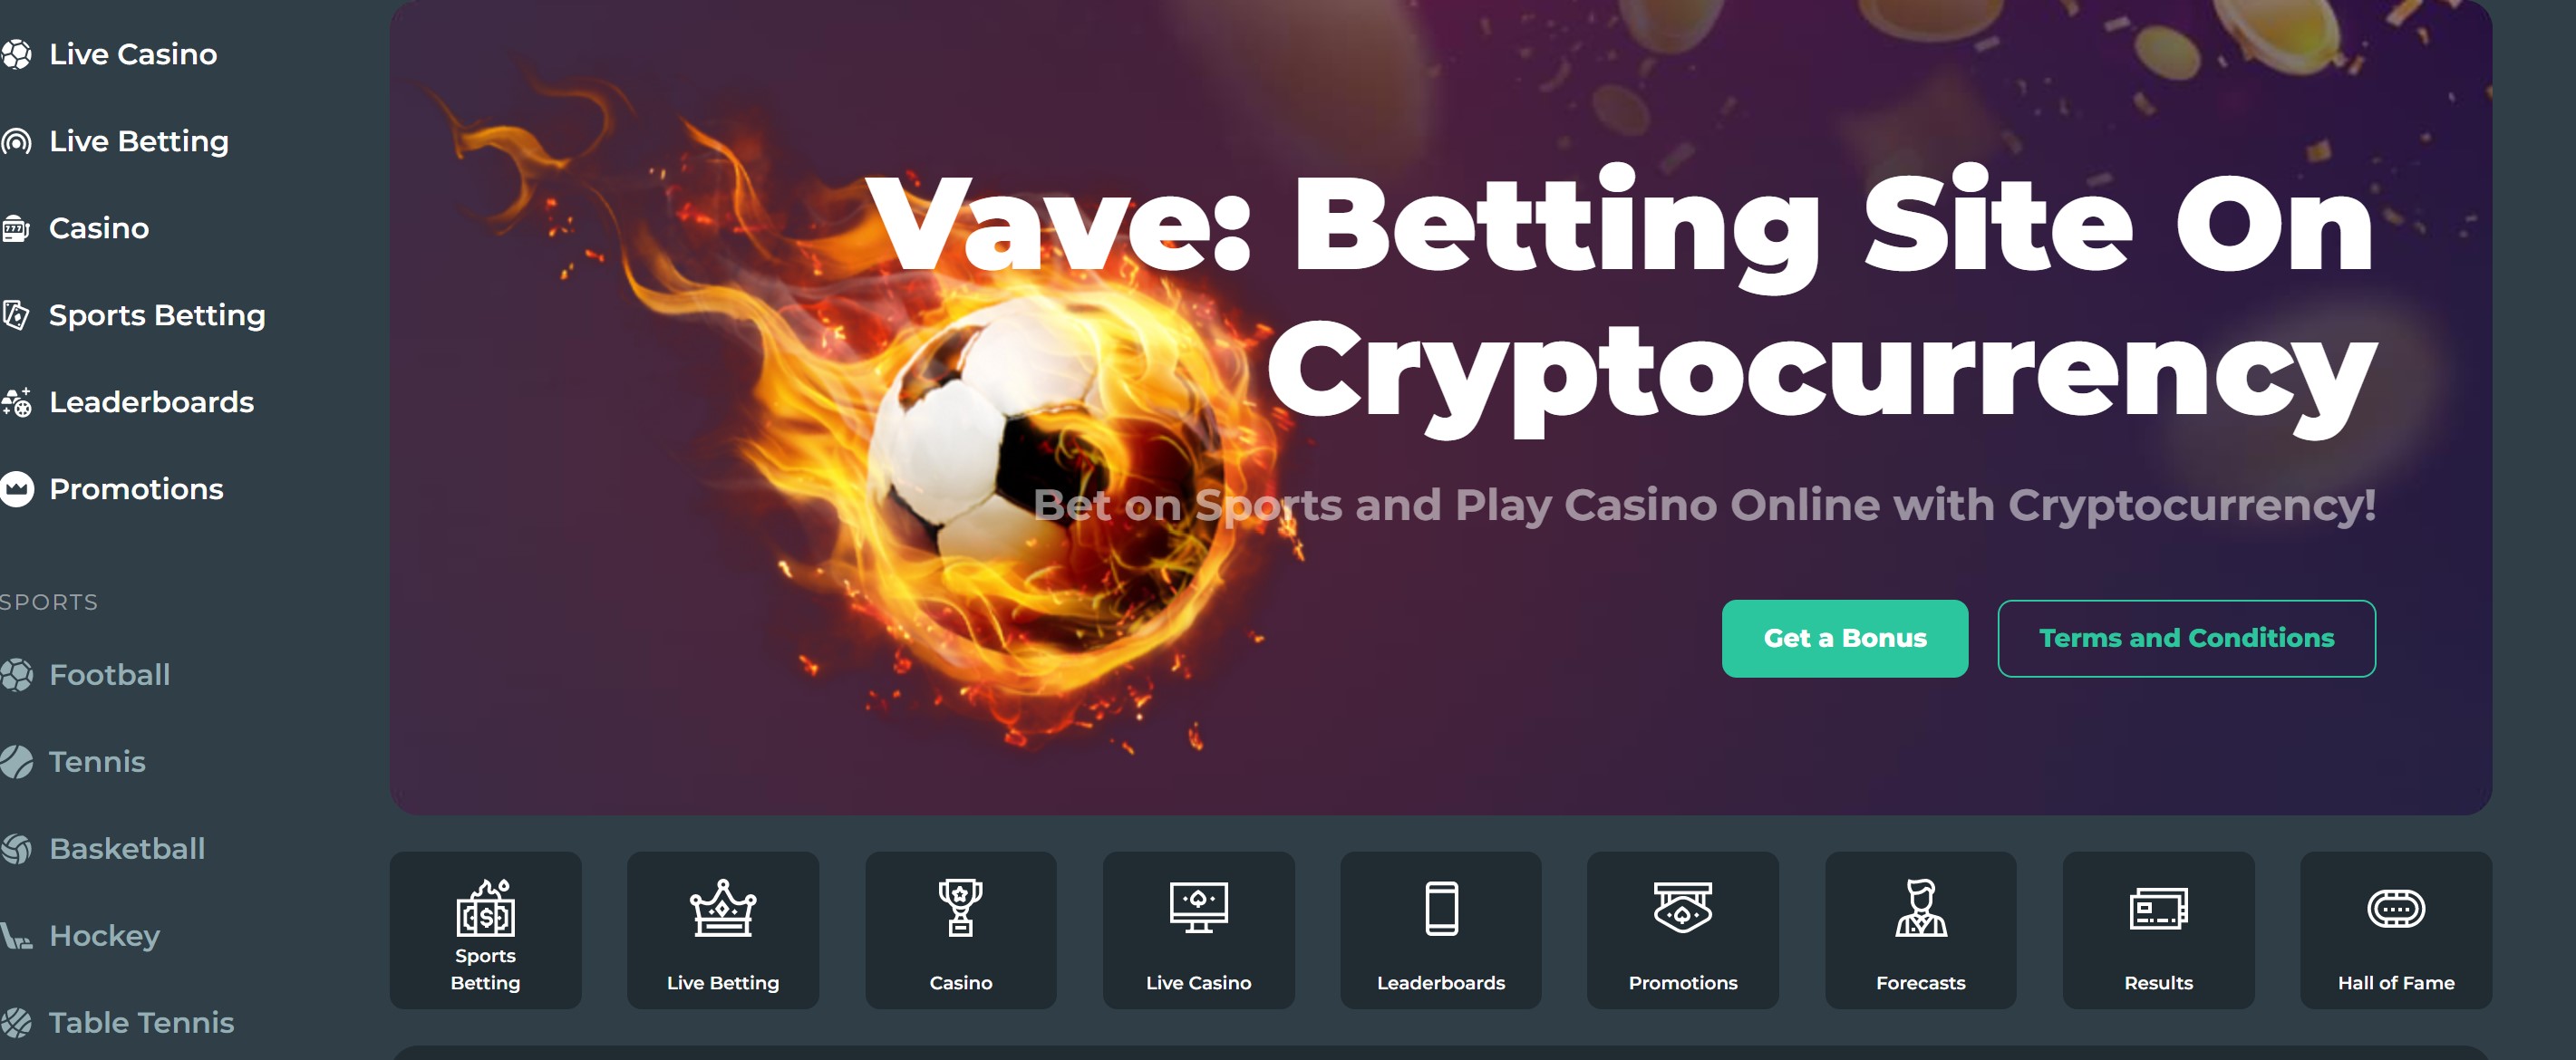 vave ethereum casino homepage